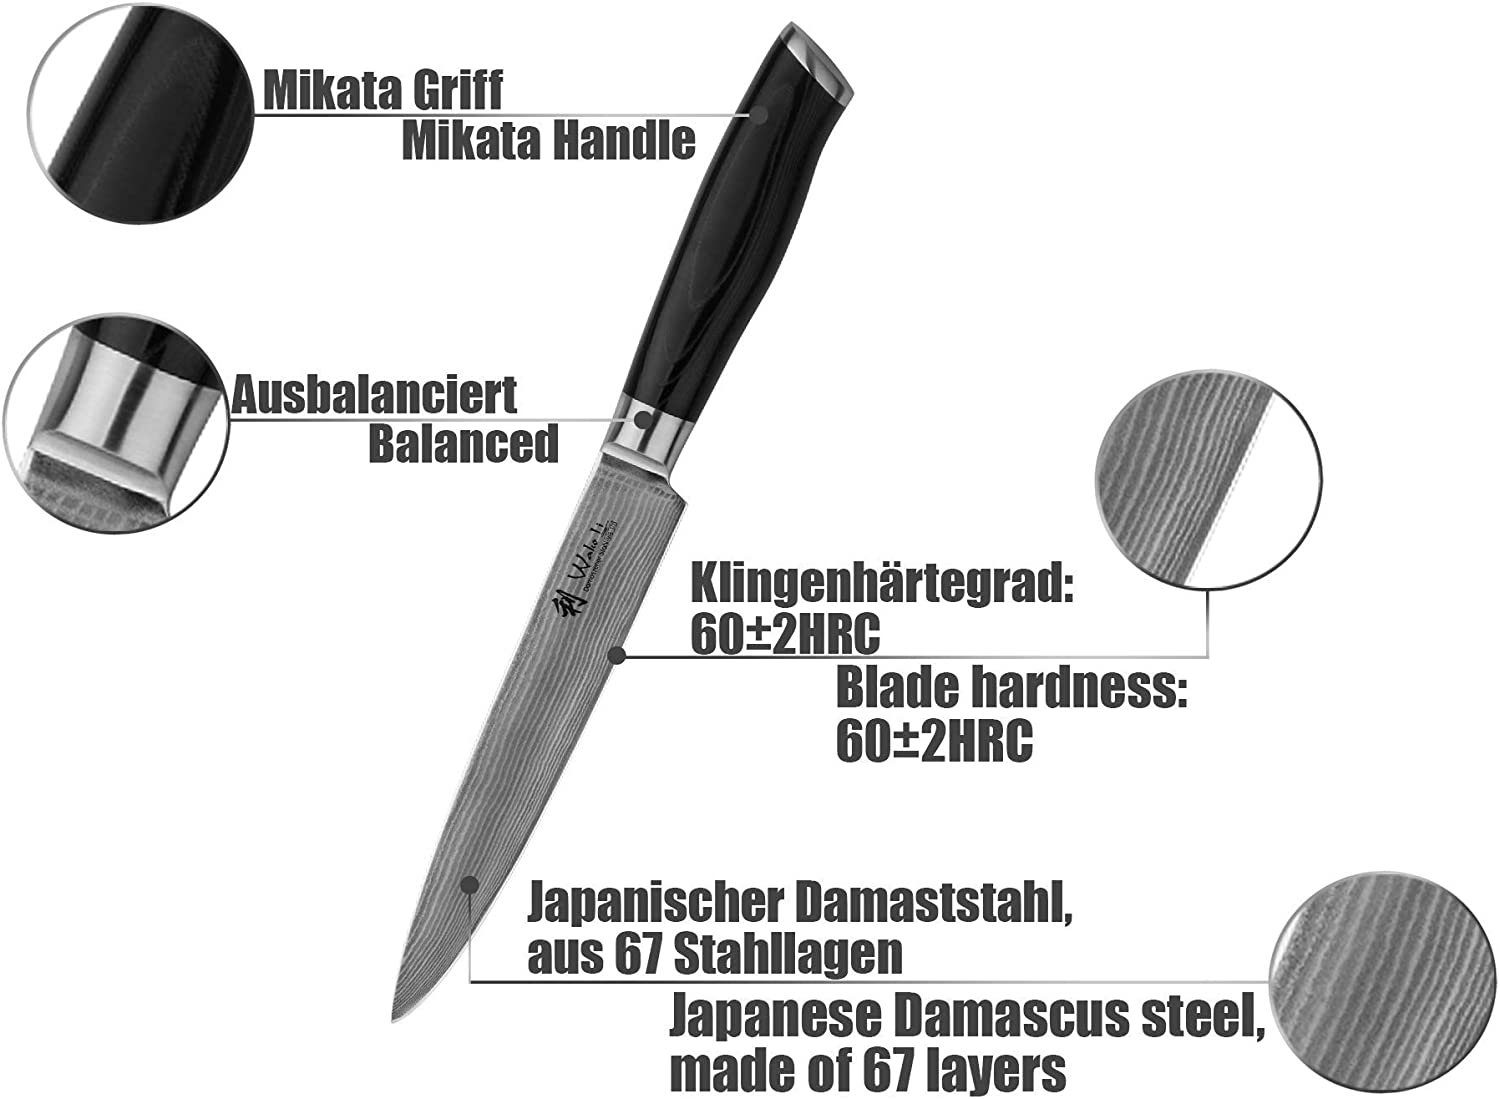 I Tranchiermesser Mikata Micartagriff 18cm Klinge Wakoli Fleischmesser I